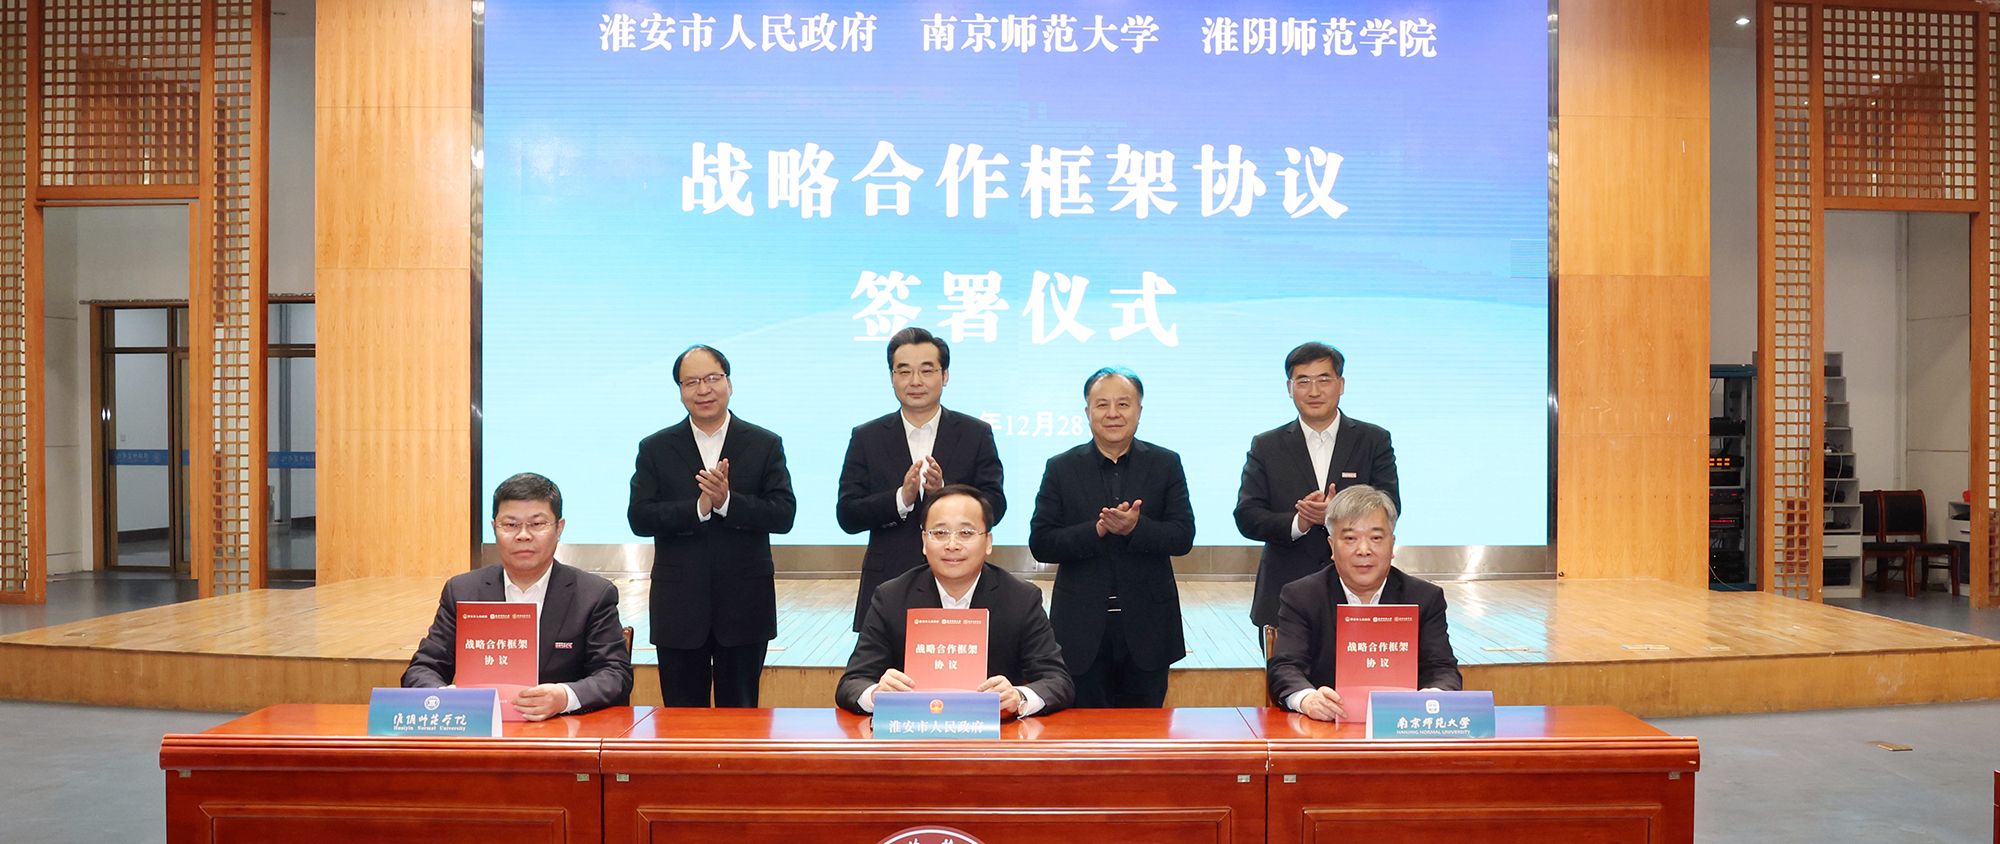 williamhill威廉希尔与淮安市人民政府、南京师范大学签署战略合作框架协议